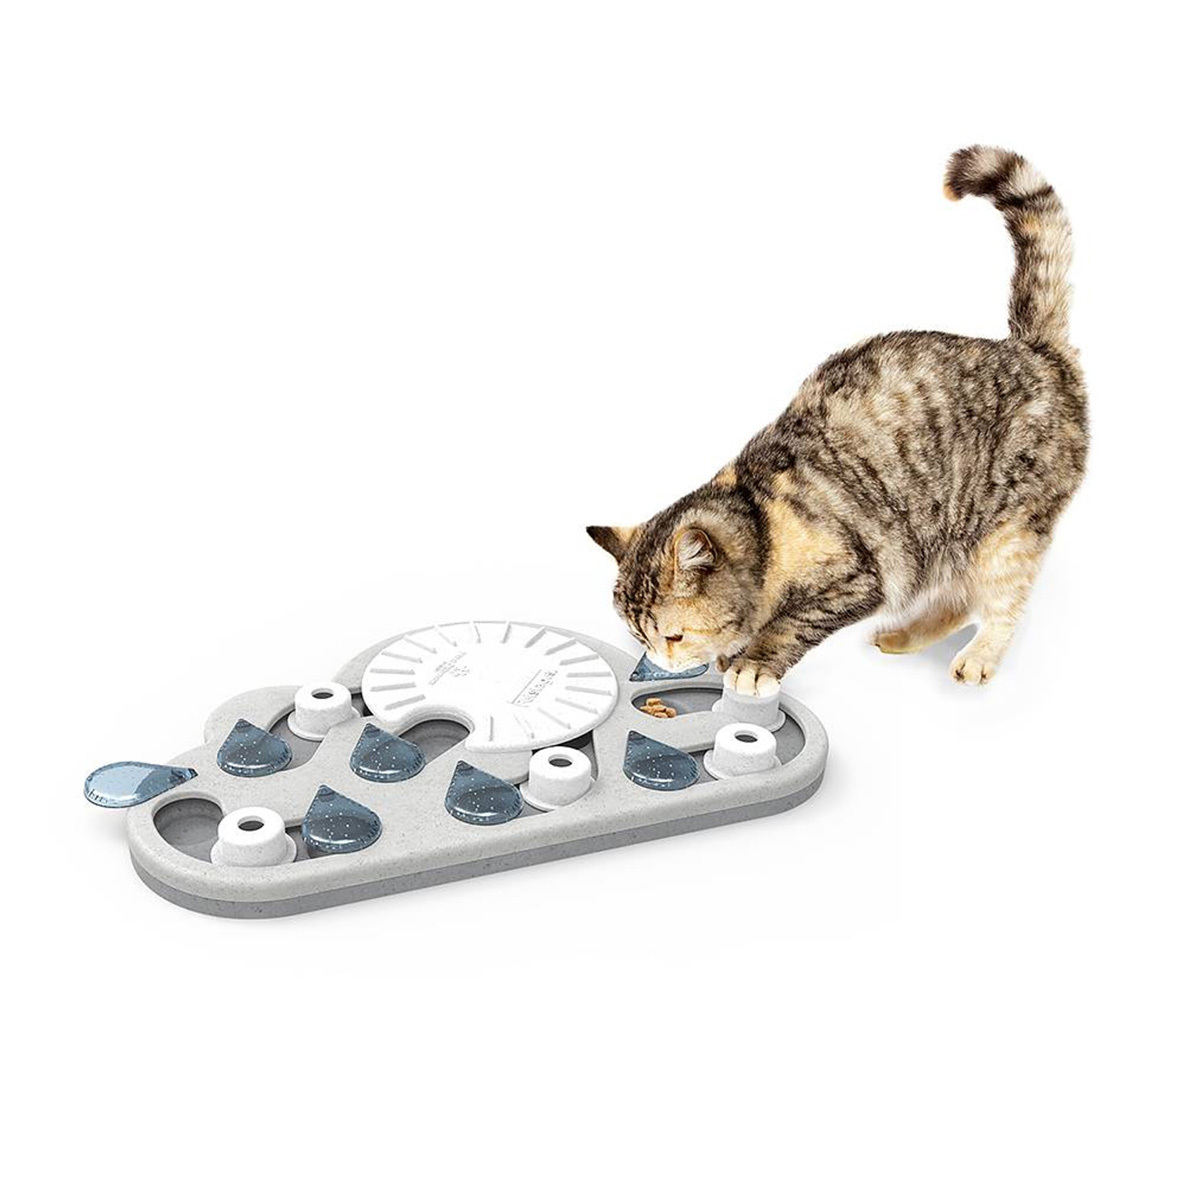 Nina Ottosson Puzzle & Play Rainy Day Treat Dispensing Cat Toy image 1